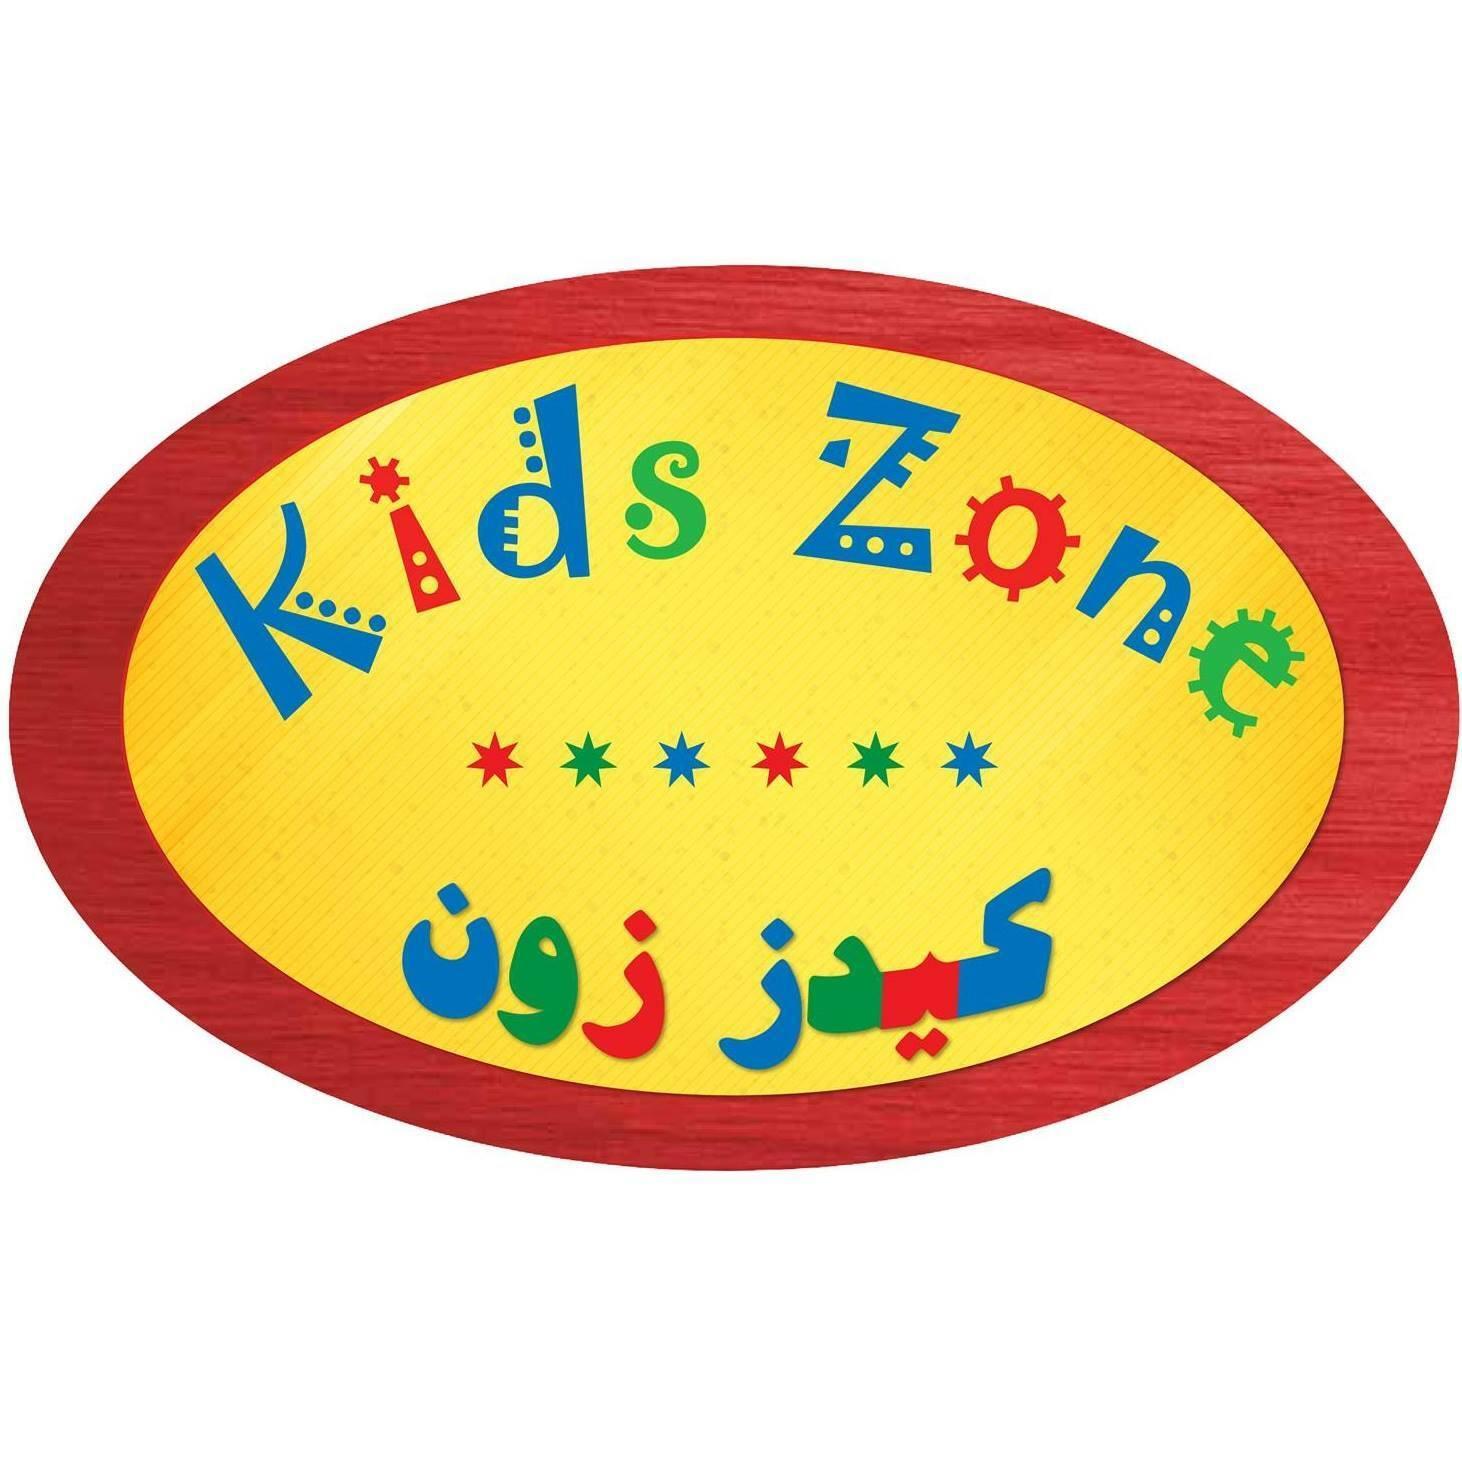 Celebrate Your Birthday At Kids Zone!31153